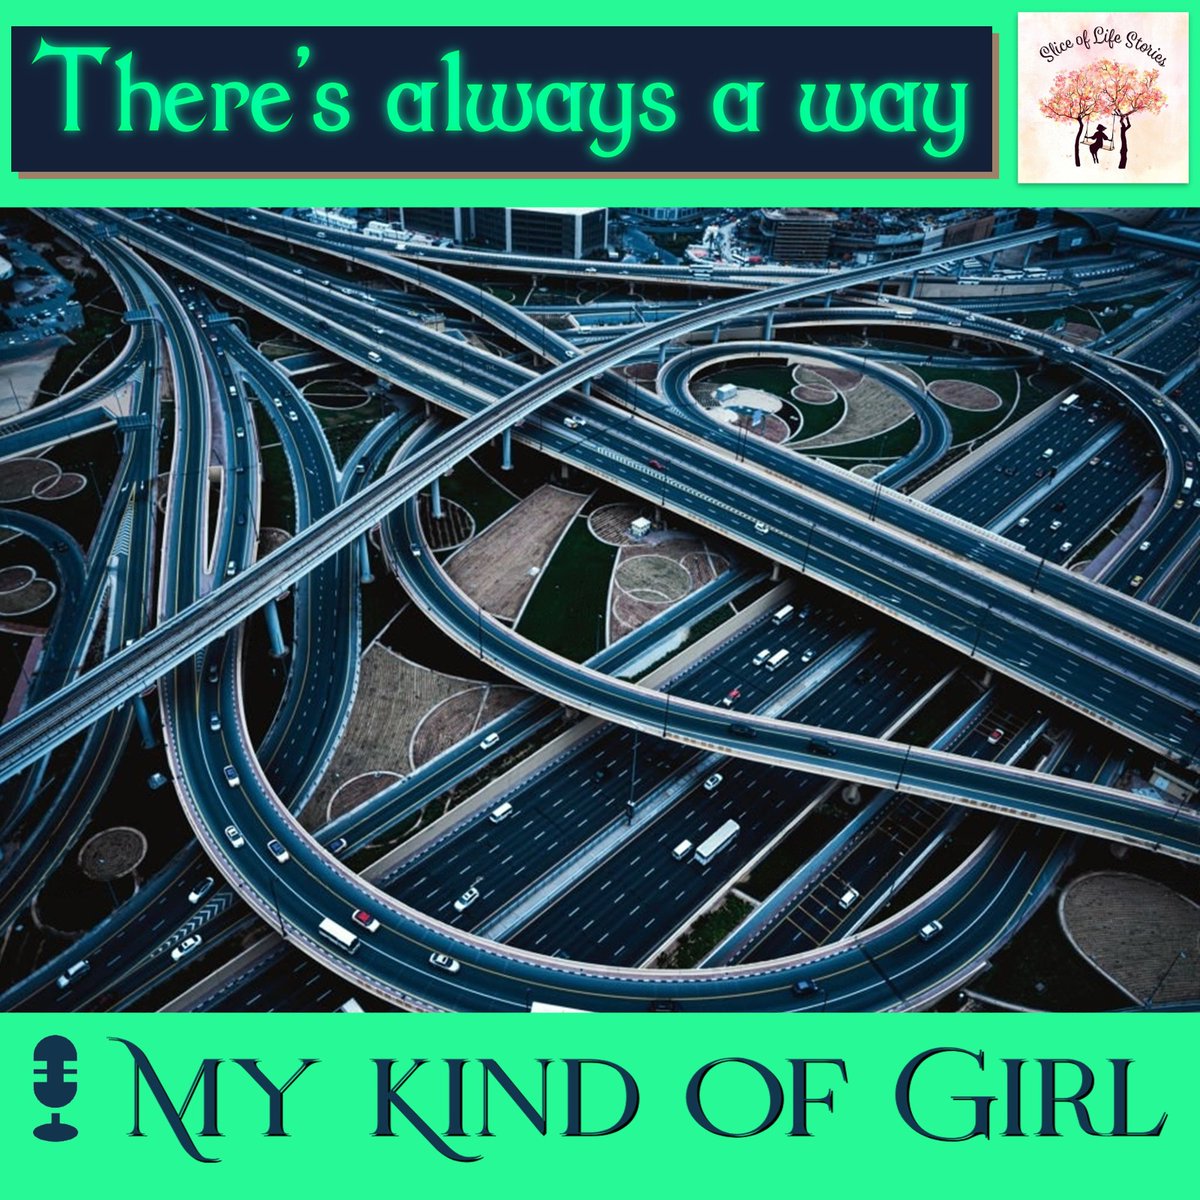 🎙 My Kind Of Girl

▶ youtu.be/Th-DIBhuYIk

#mykindofgirl #traincompartment #regularpassenger #prettygirl #bookworm #conservative #acatmaylookataqueen #admiringfromafar #signlanguage #hearingimpaired #theresalwaysaway